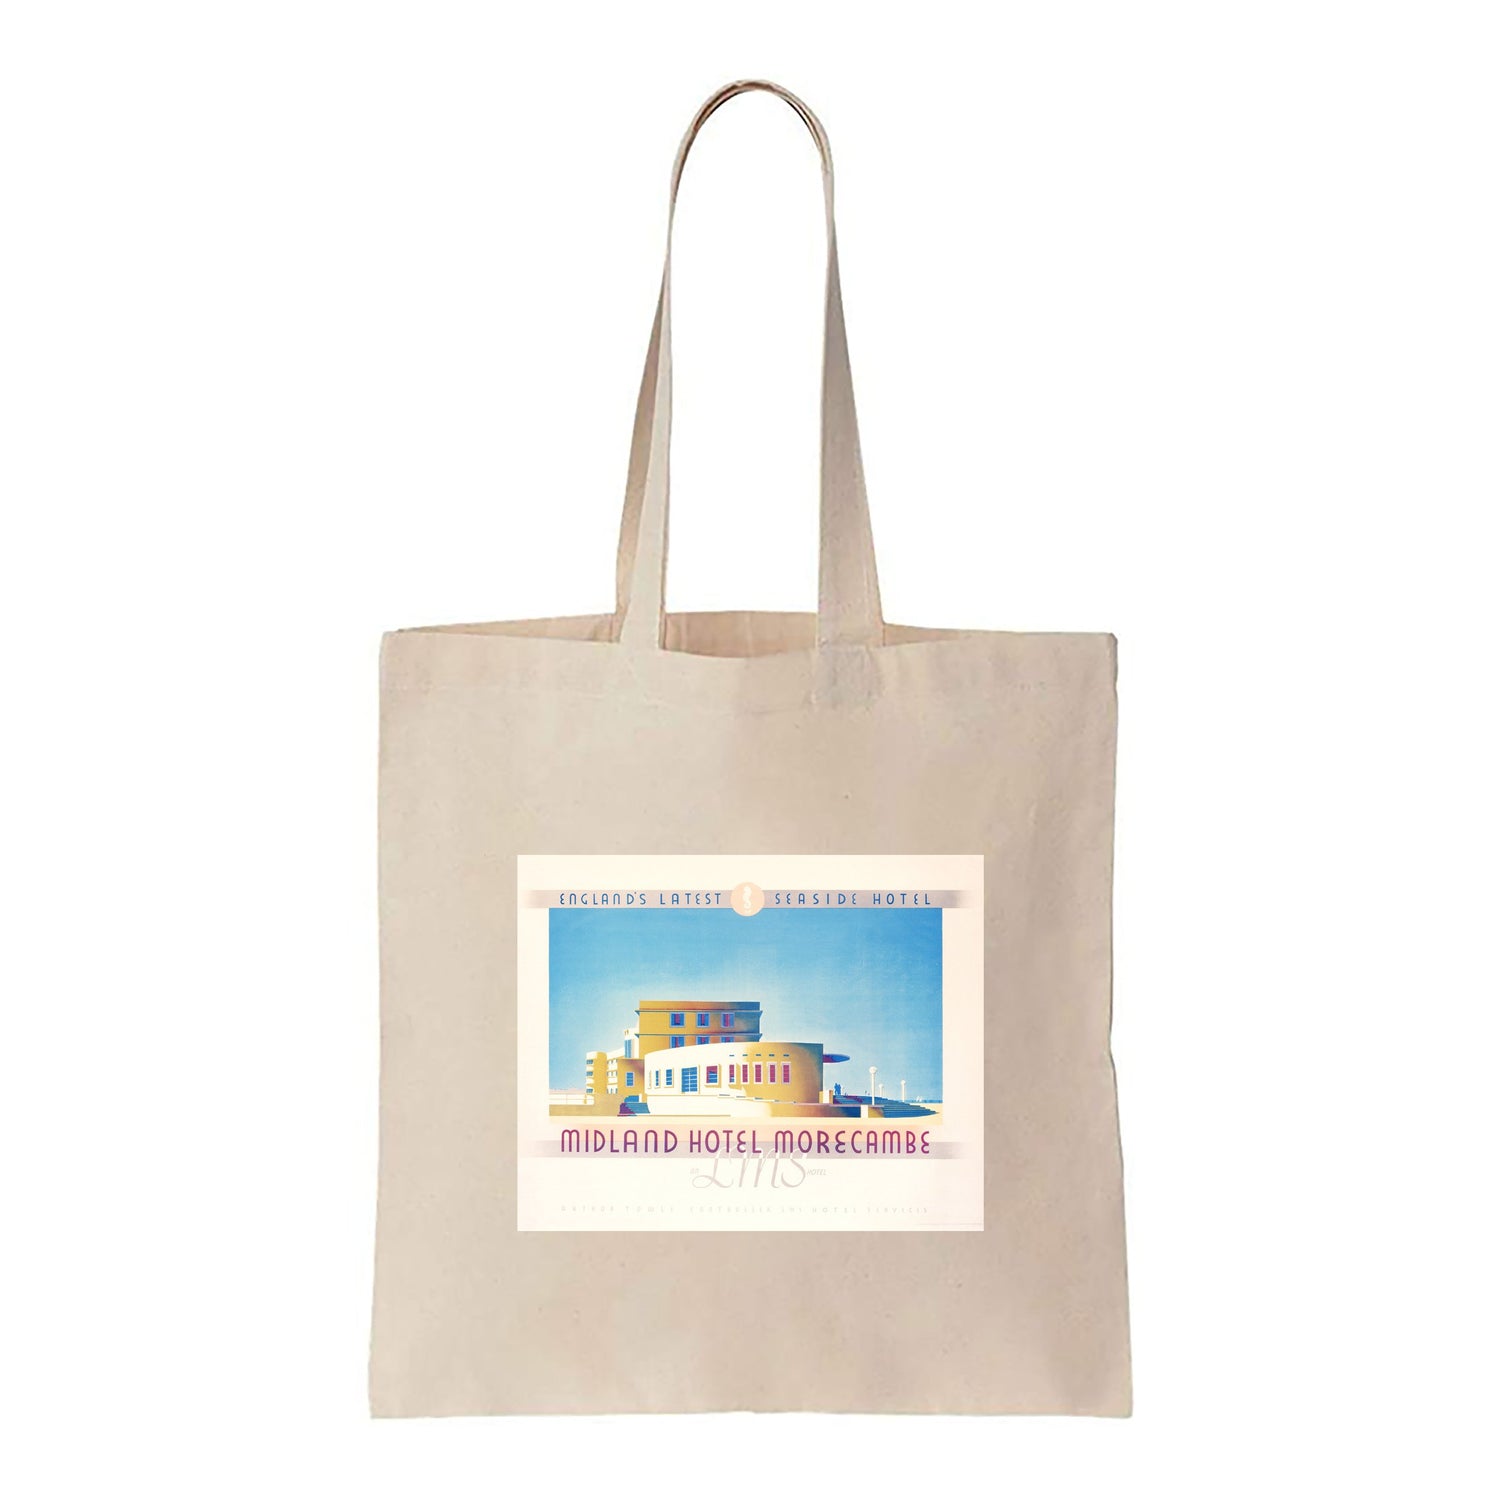 Midland Hotel Morecambe - Canvas Tote Bag